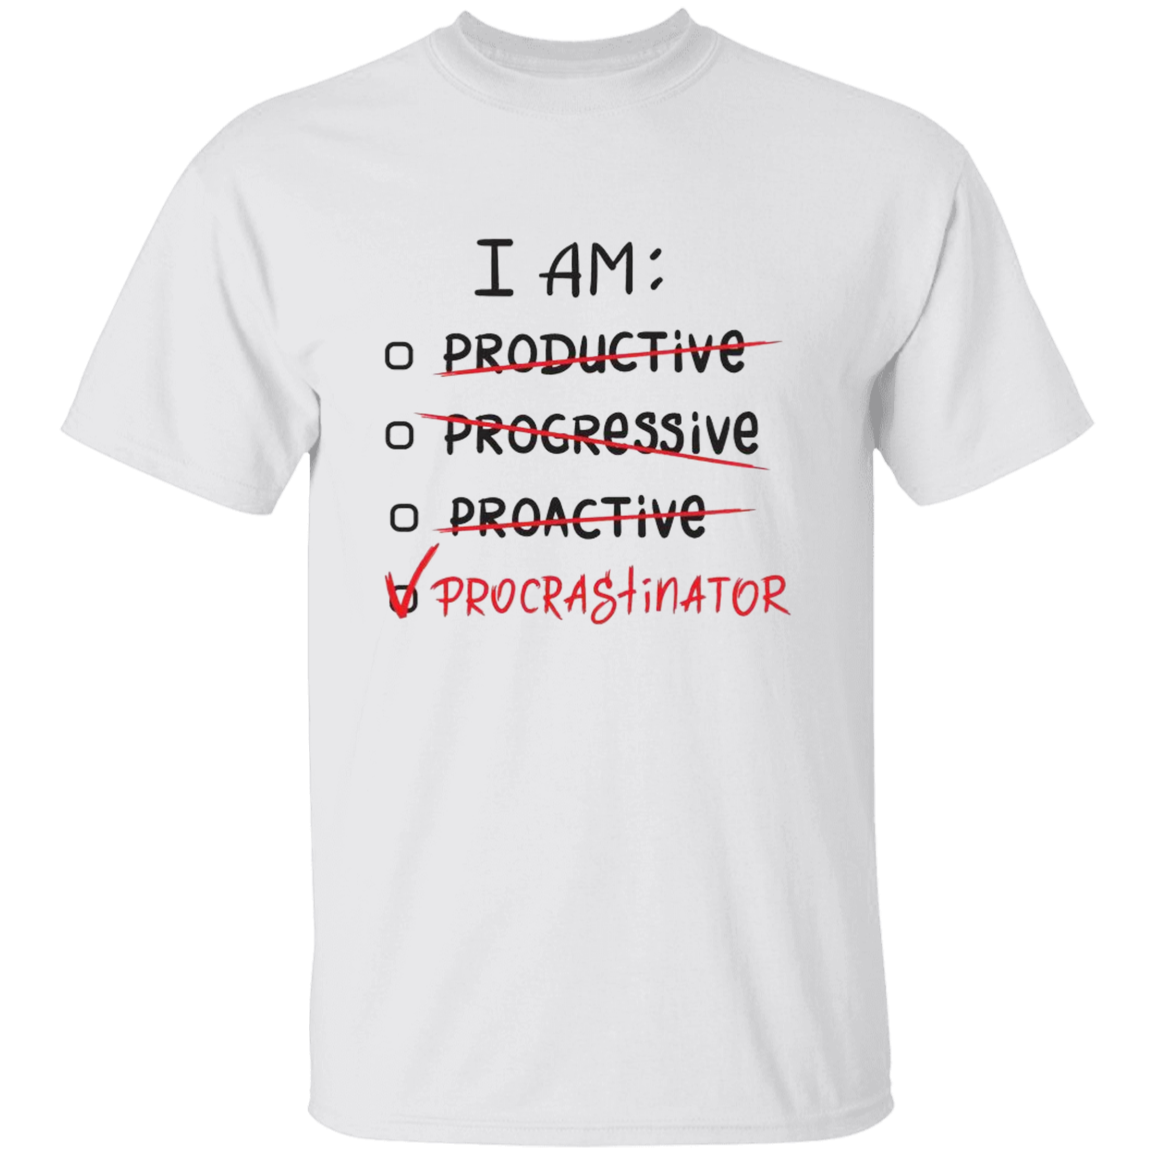 I Am Procrastinator 5.3 oz. T-Shirt